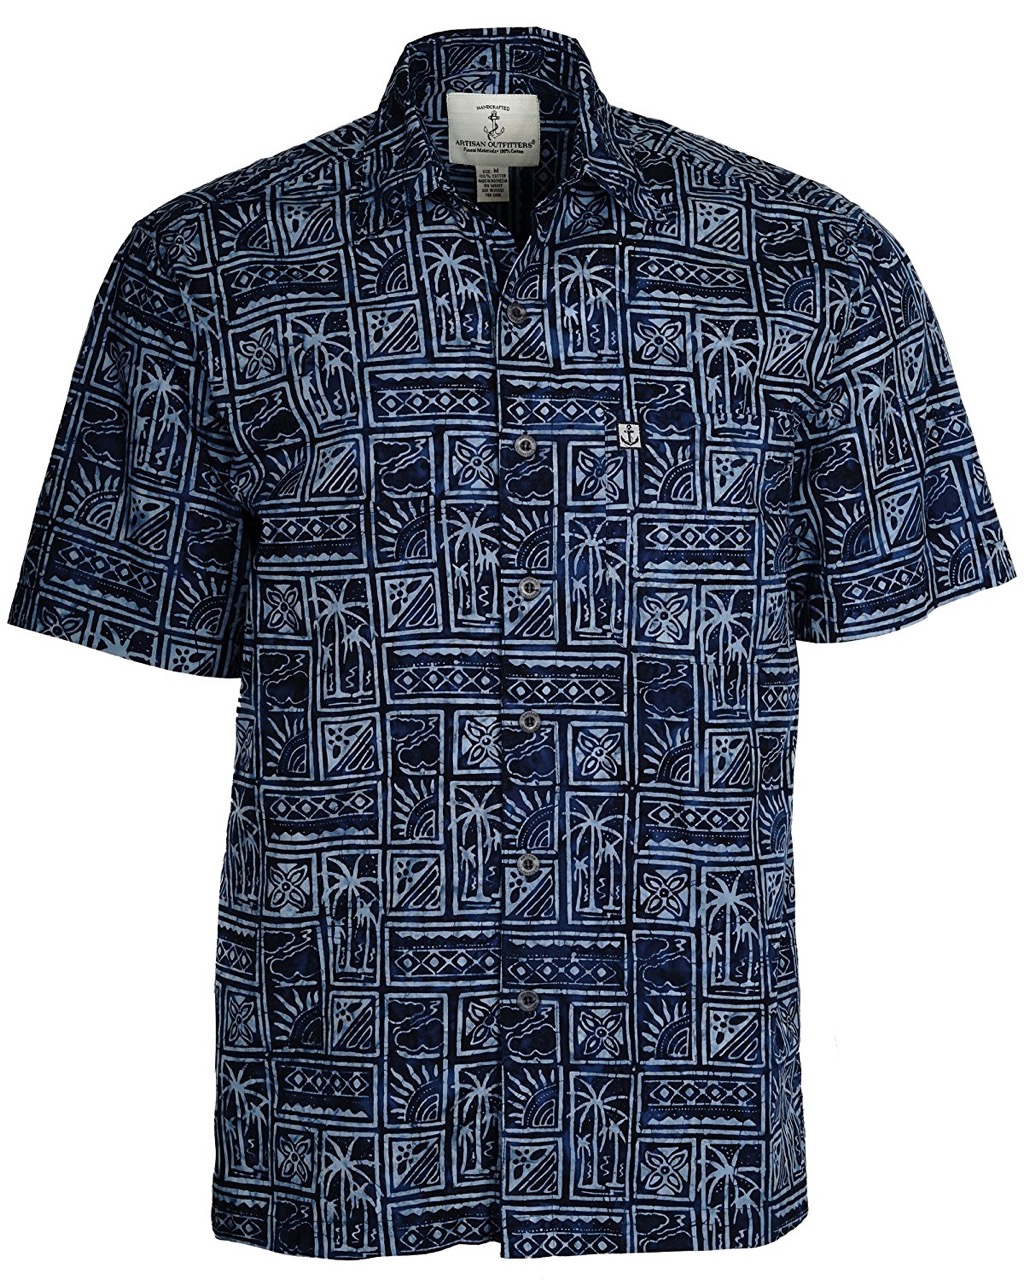 Artisan Outfitters Outer Banks Batik Print Shirt